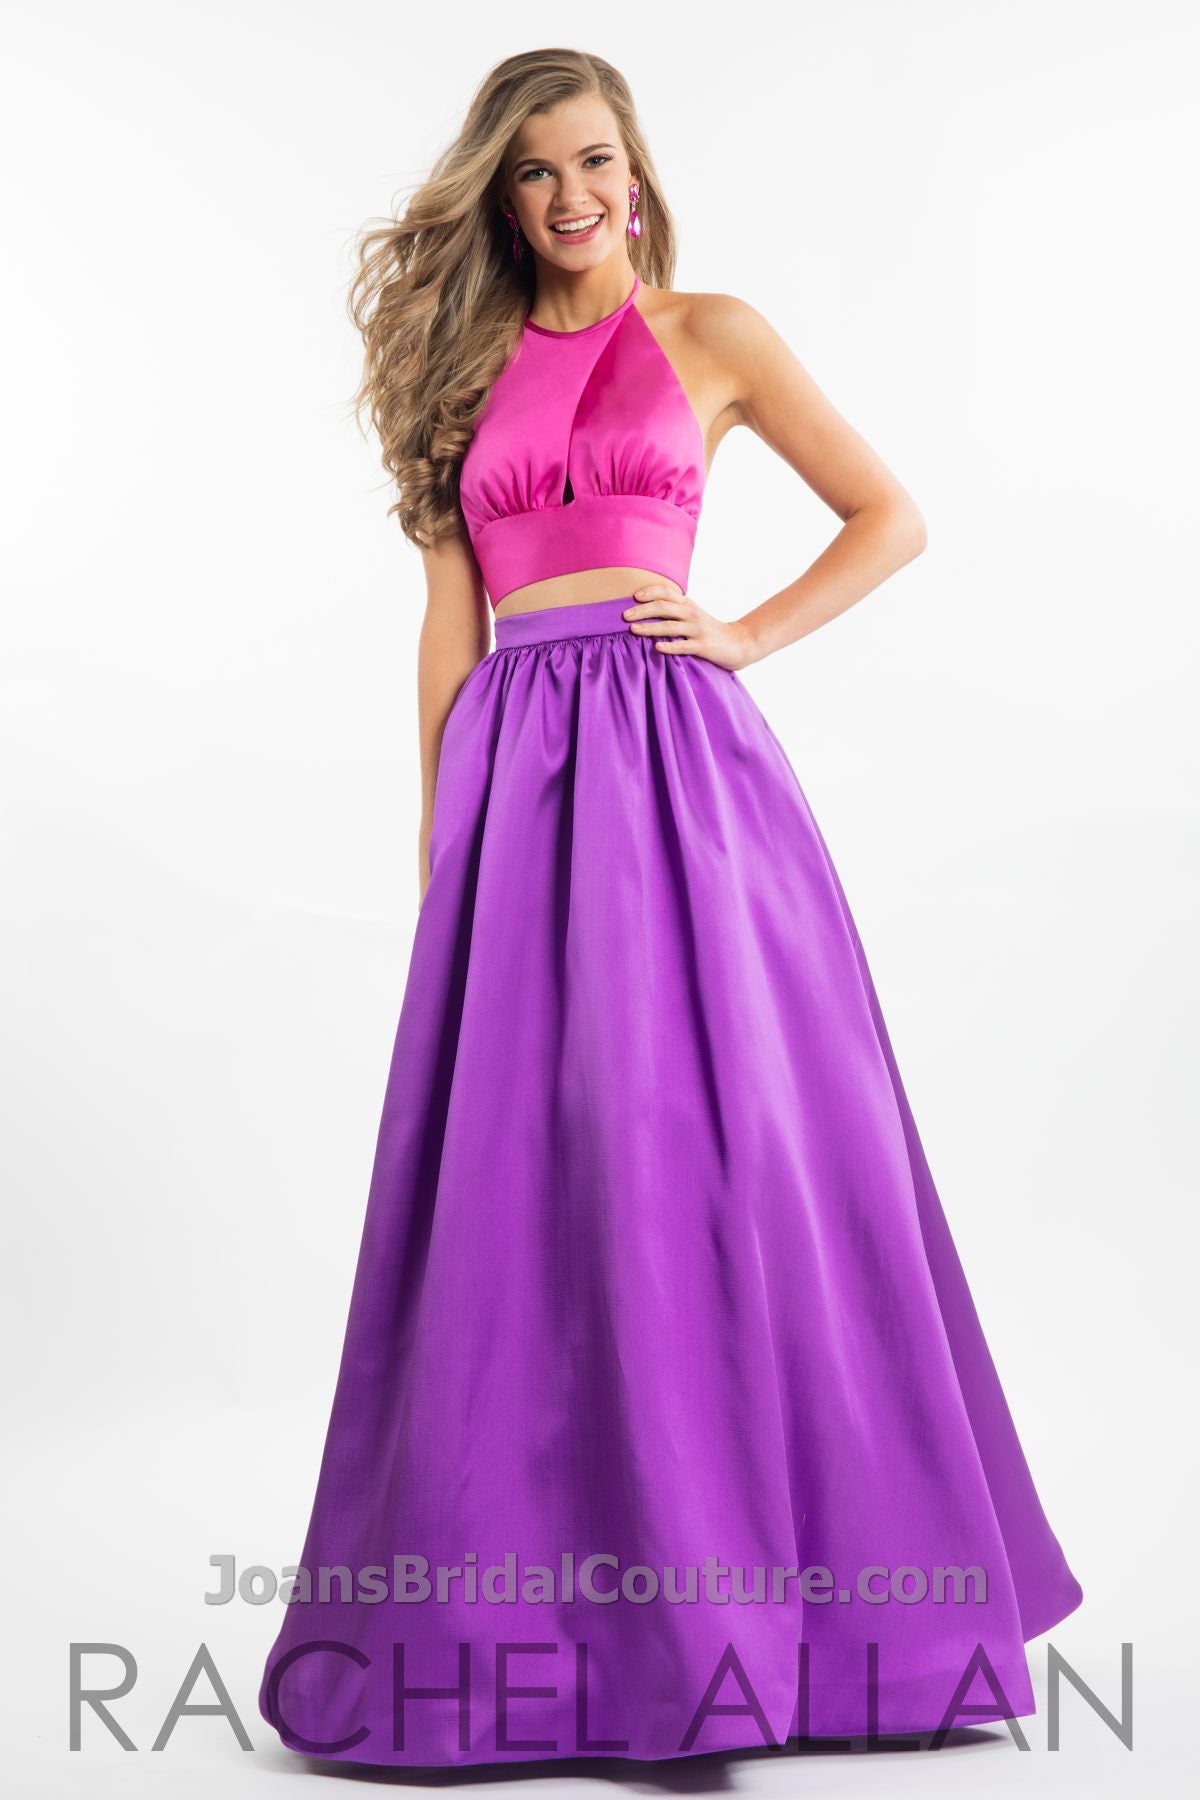 RACHEL ALLAN Style 7513 Size 2 Magenta/Purple